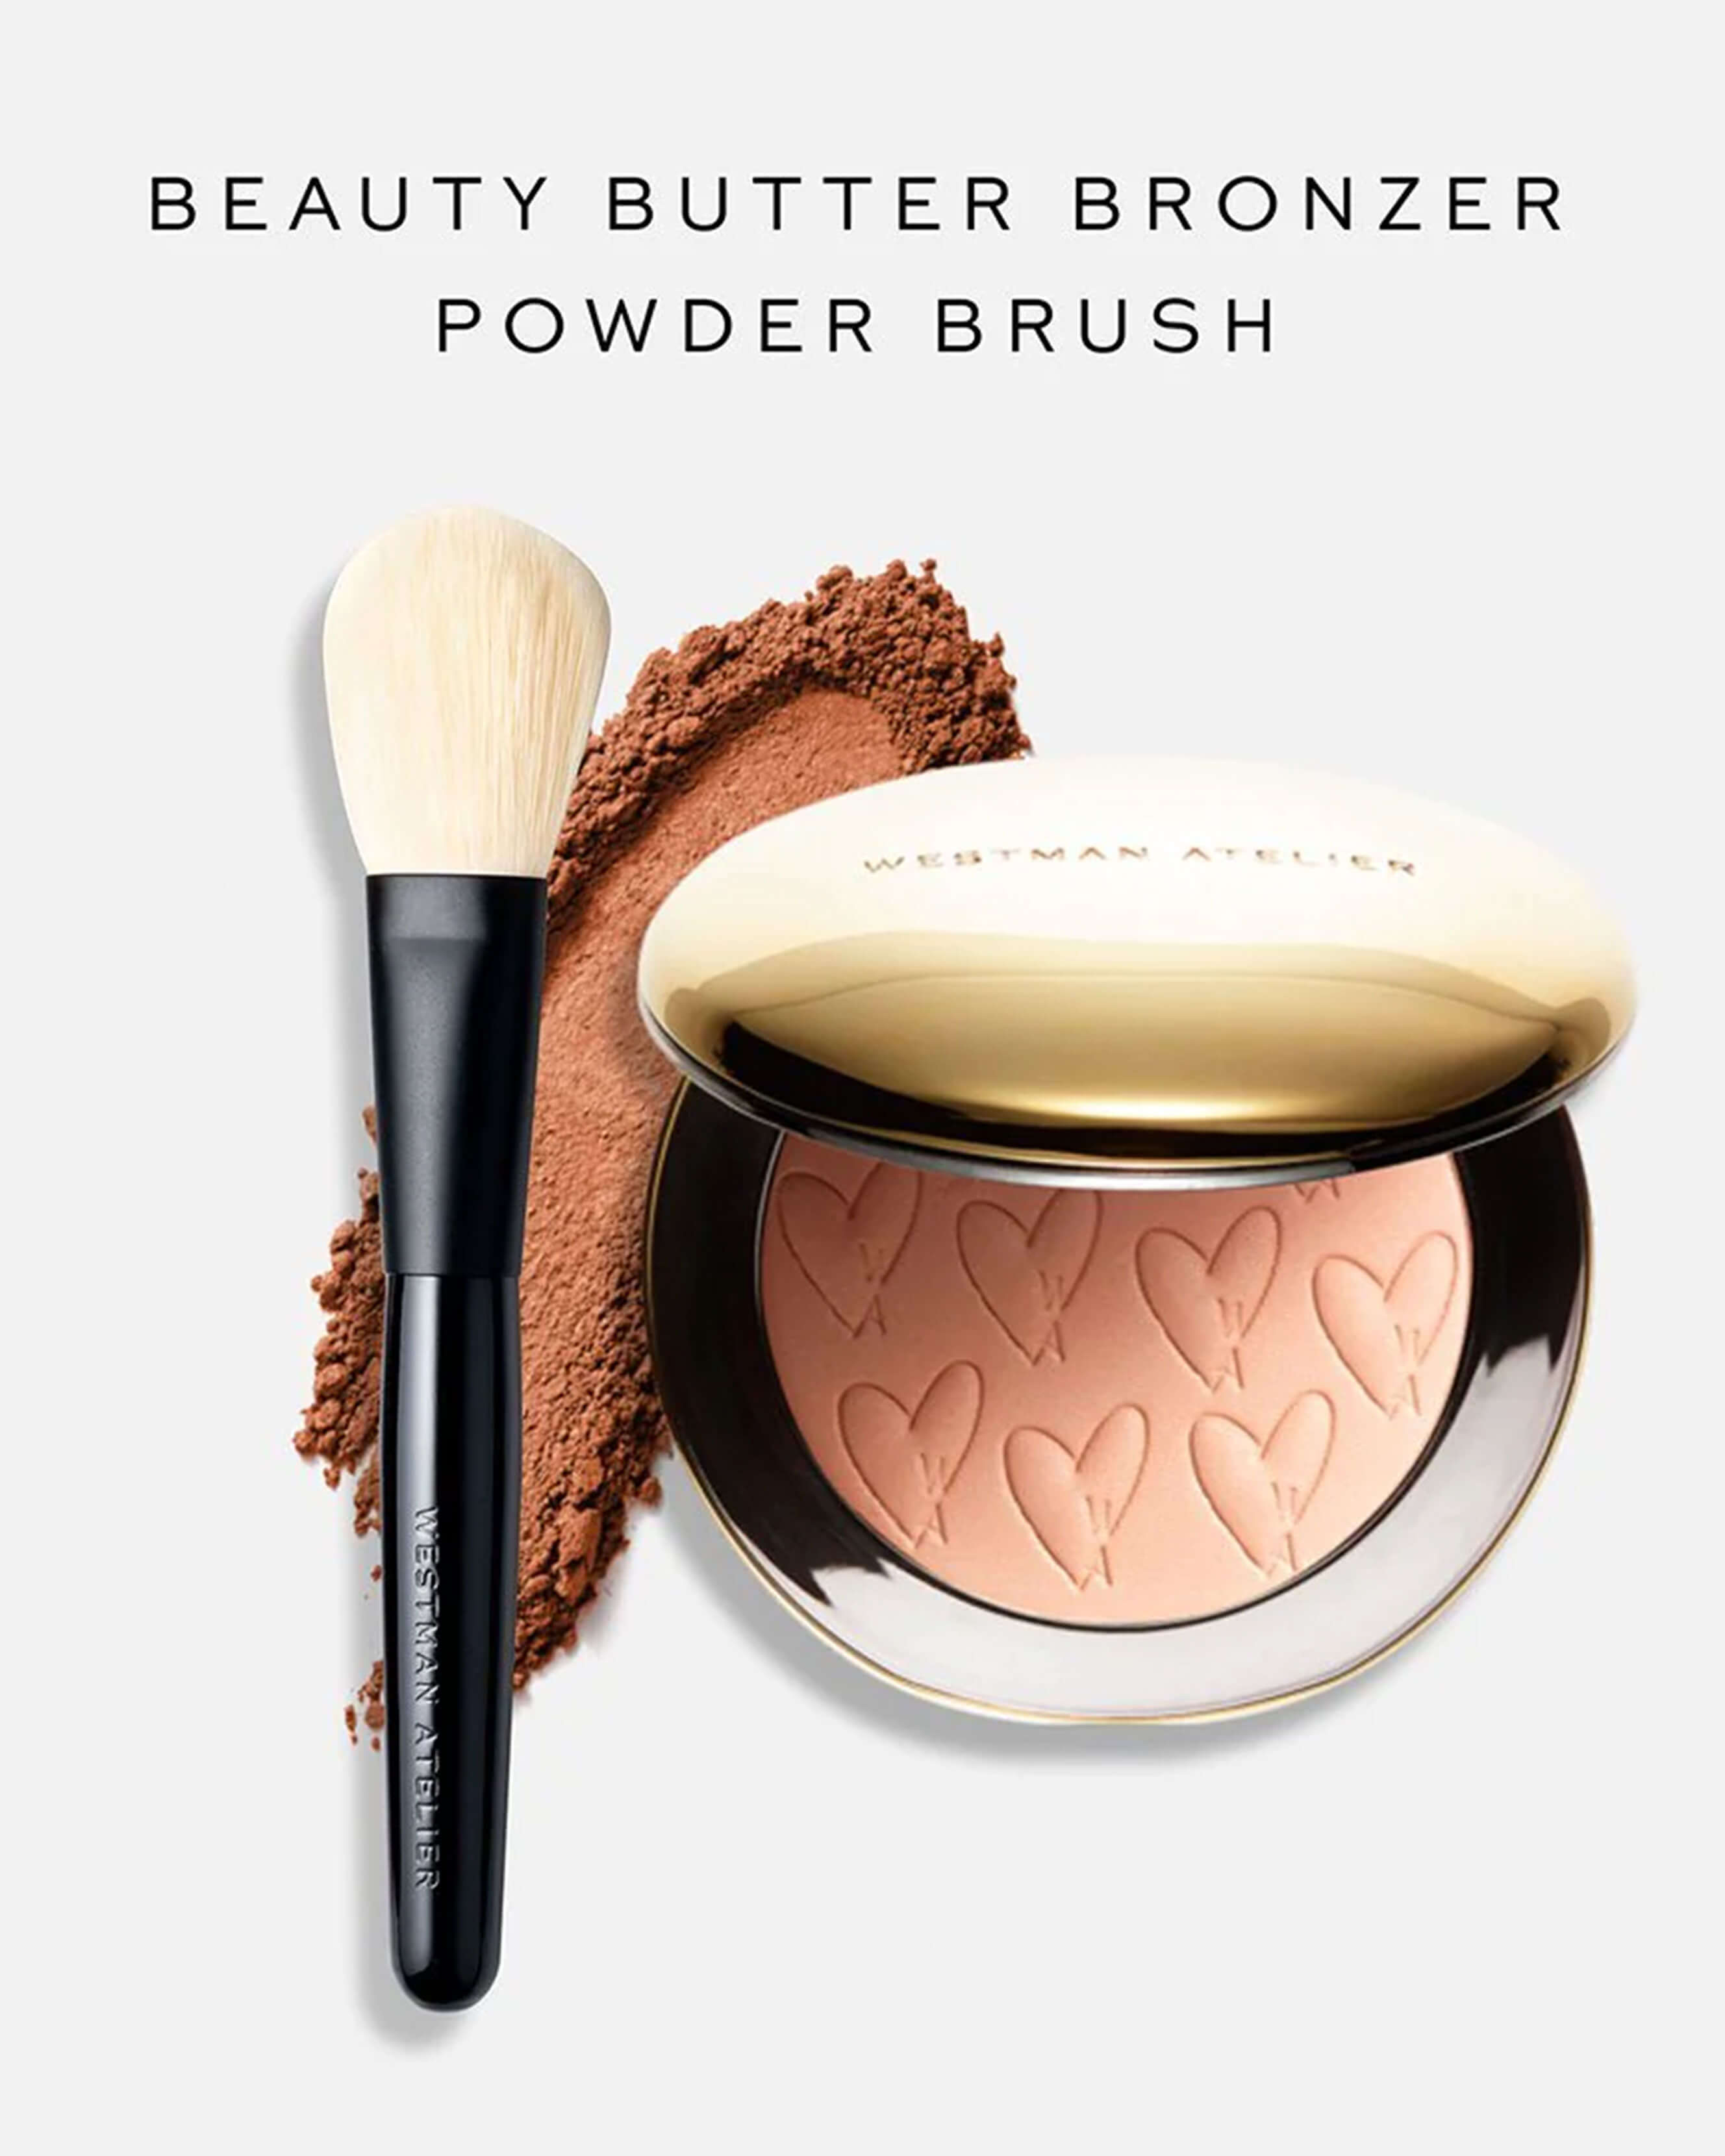 Revolution Splendor Matte Bronzer Powder, Contour Makeup For Bronzing,  Vegan & Cruelty-Free, Medium